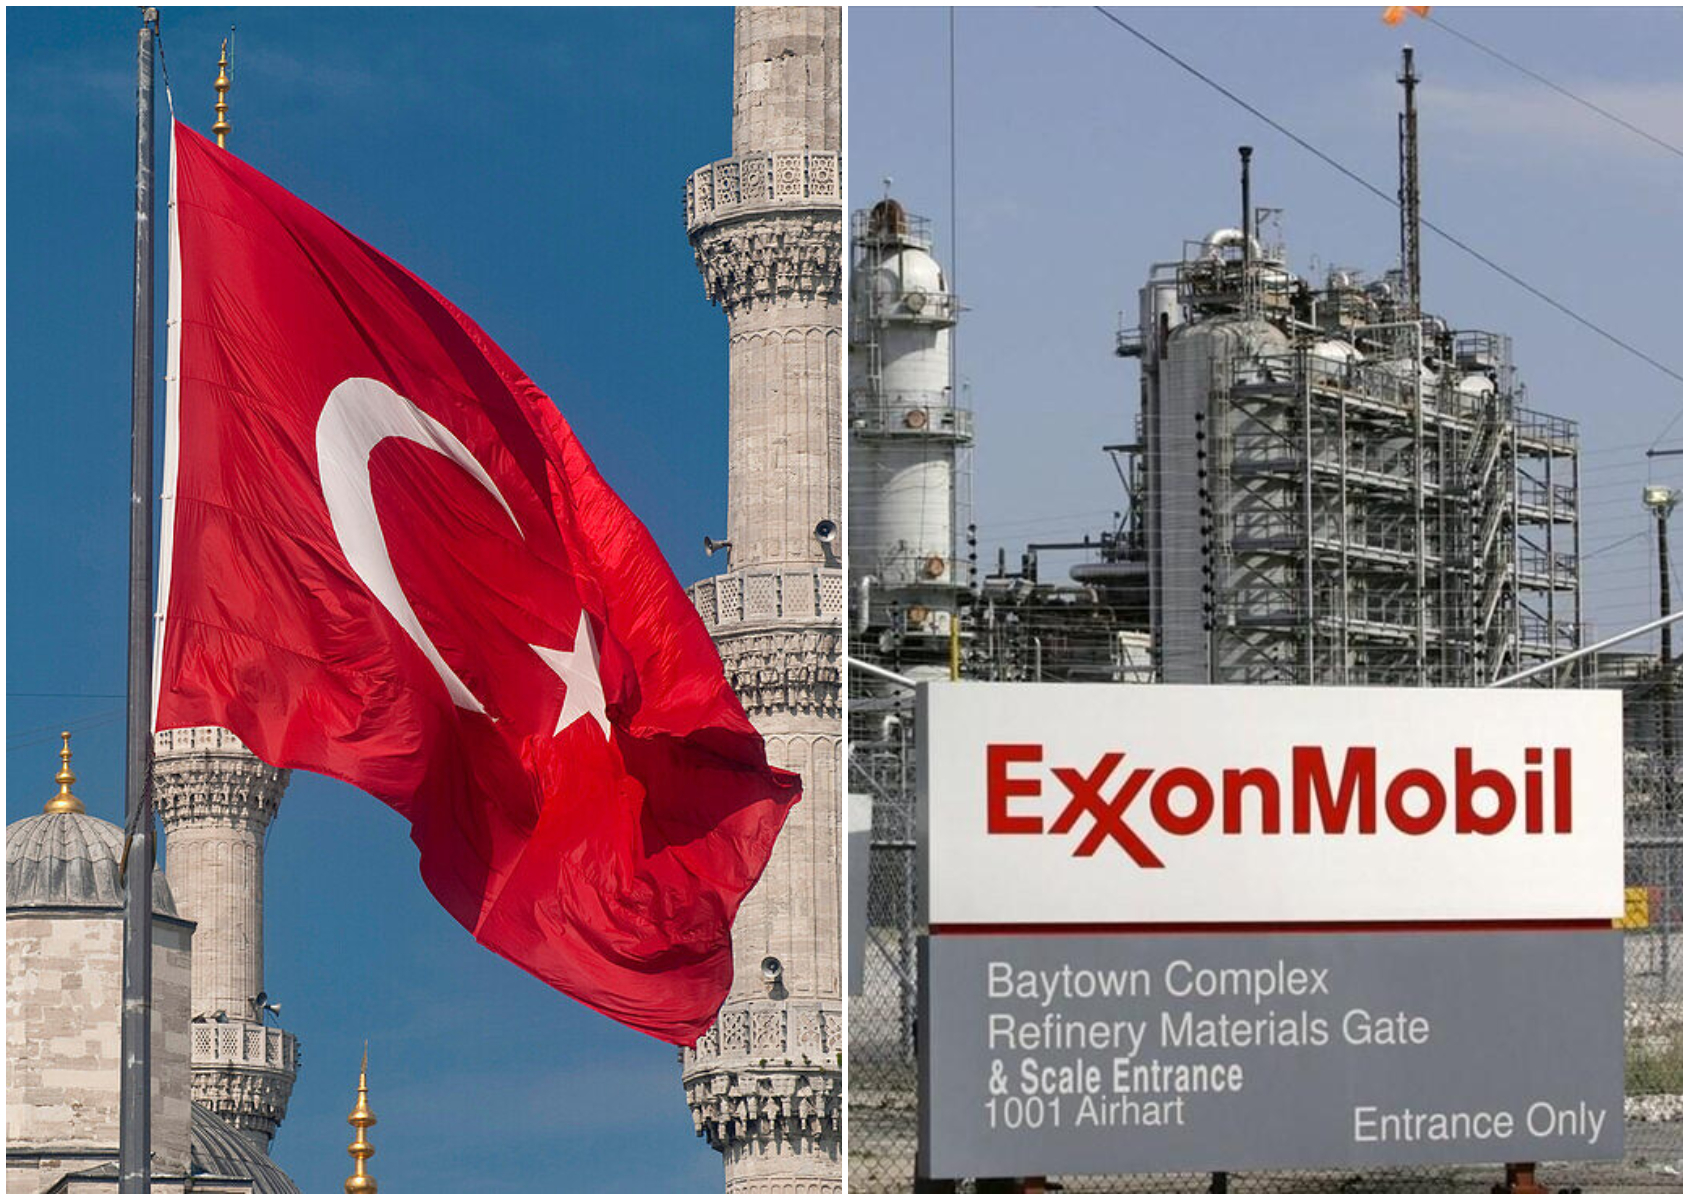 FT: Τουρκία και ExxonMobil ετοιμάζουν deal πολλών δισ. δολαρίων στο LNG